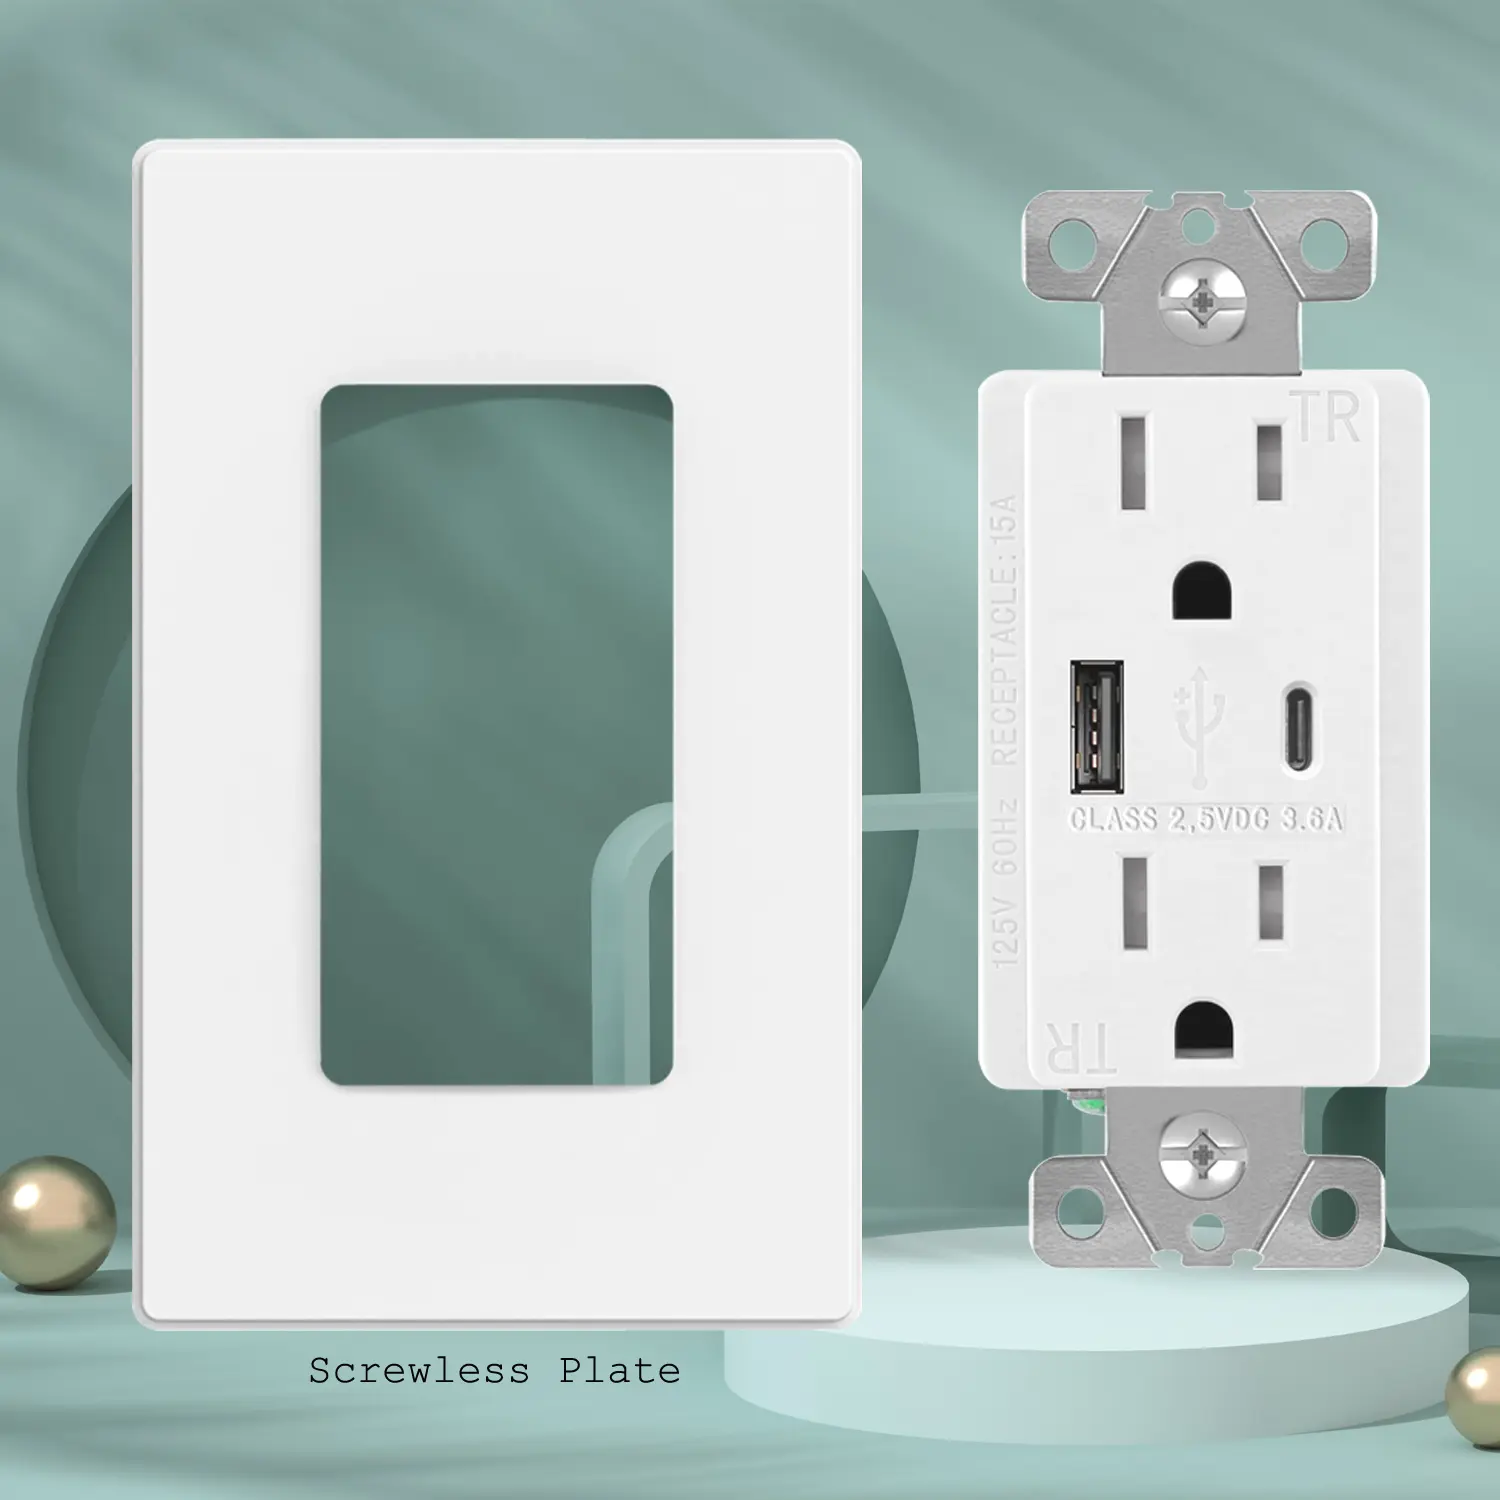 FTR15C 3.6a Ul Cul Certification Electrical Power Charging Type C Wall Socket Usb C Plug Socket In White